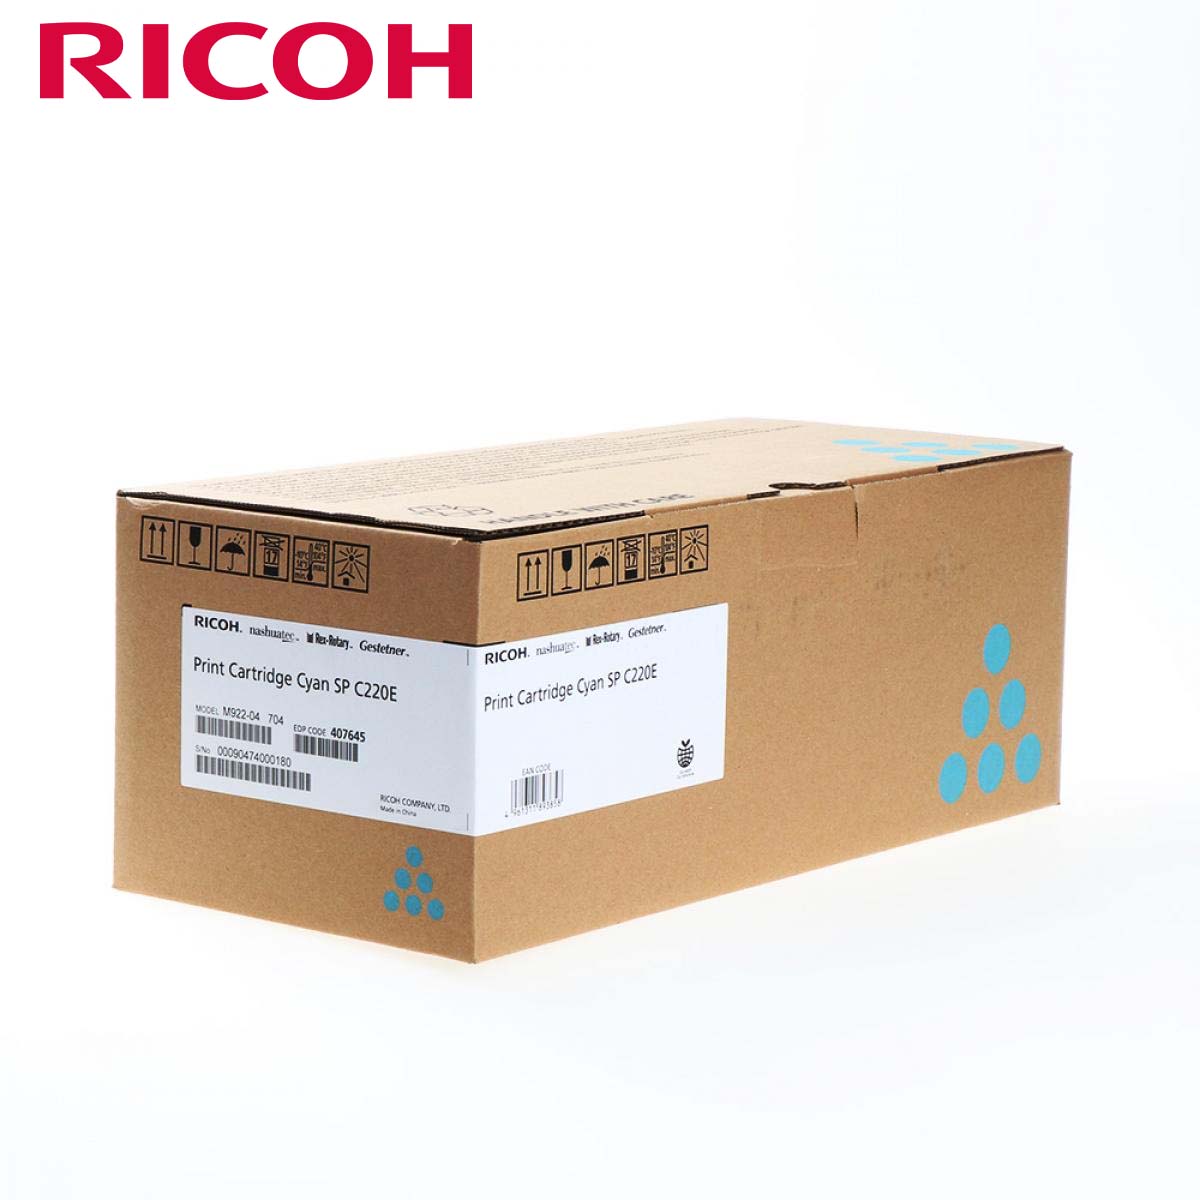 Ricoh 406053 Laser Toner Cartridge Cyan (Original)